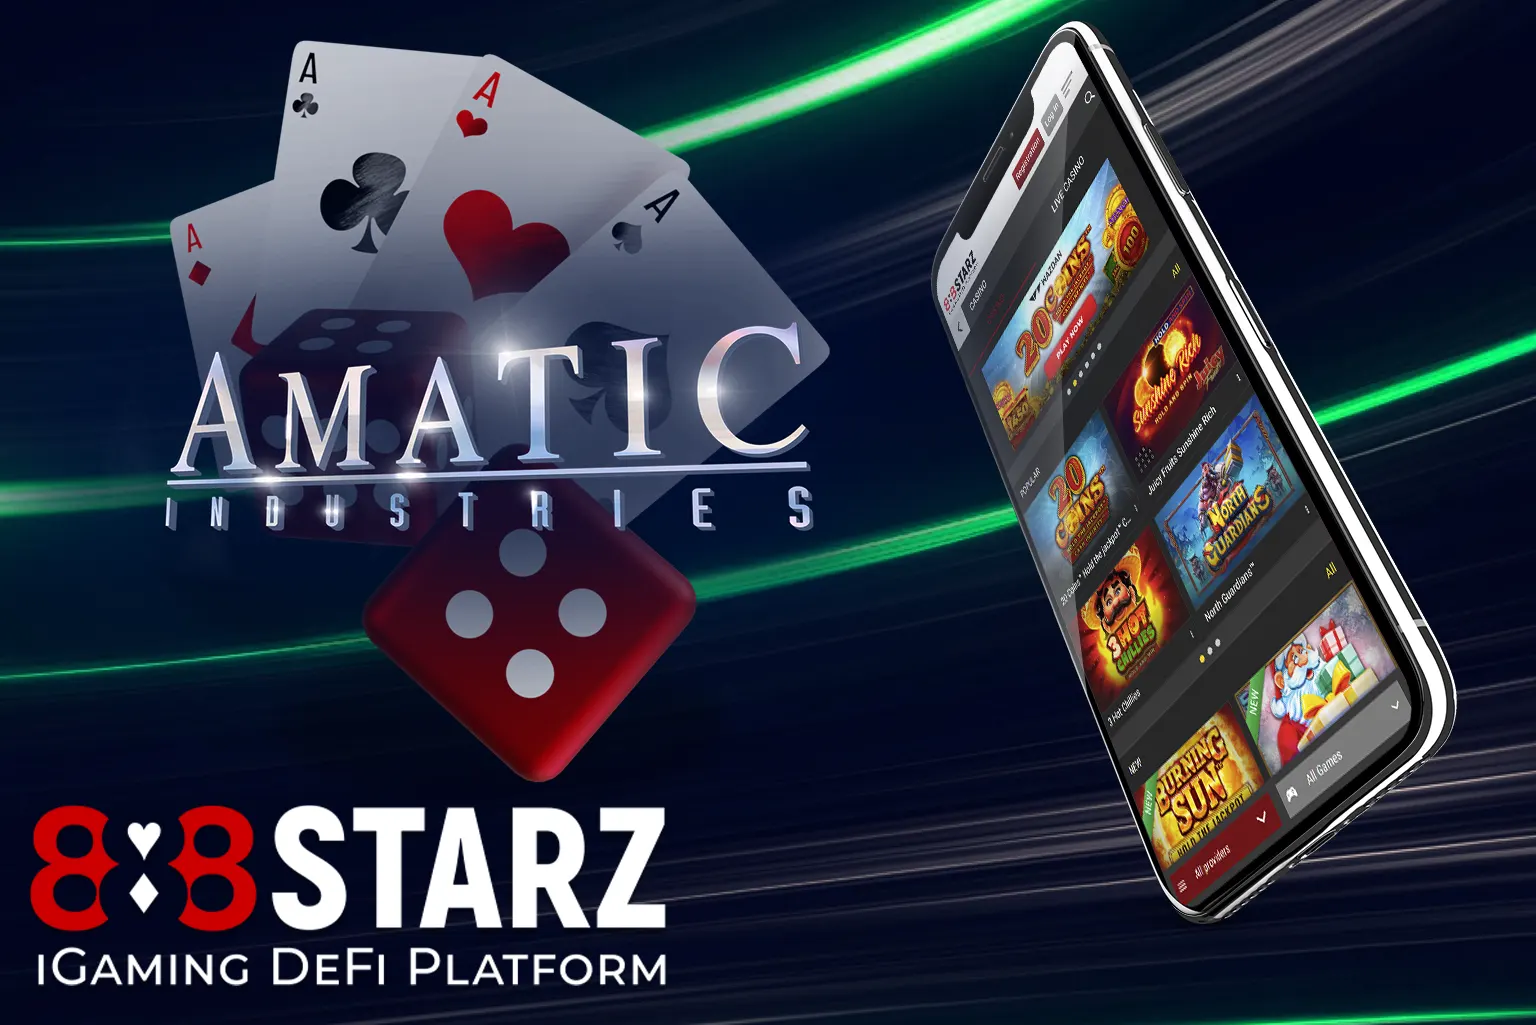 Enjoy playing at the most customer-friendly casino provider 888starz.